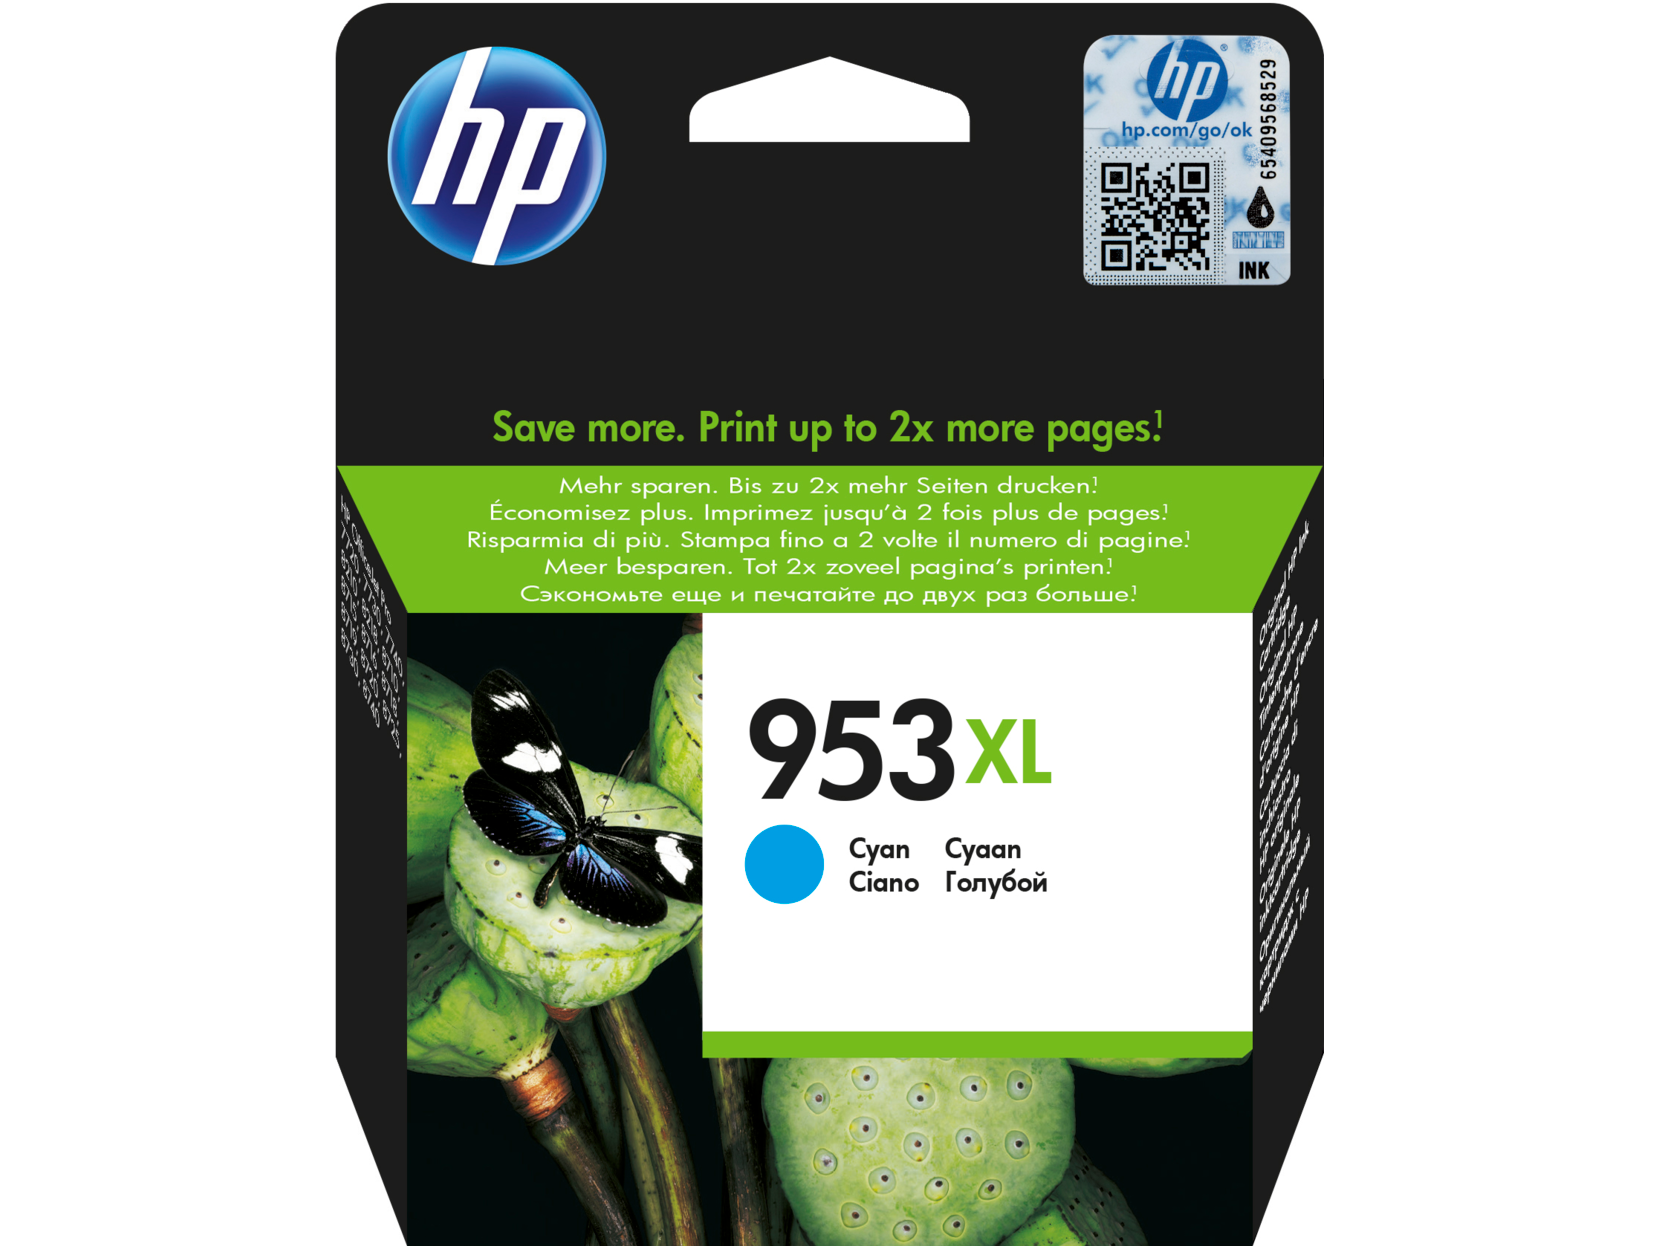 Картридж для печати HP Картридж HP 953XL F6U16AE вид печати струйный, цвет Голубой, емкость 20мл.